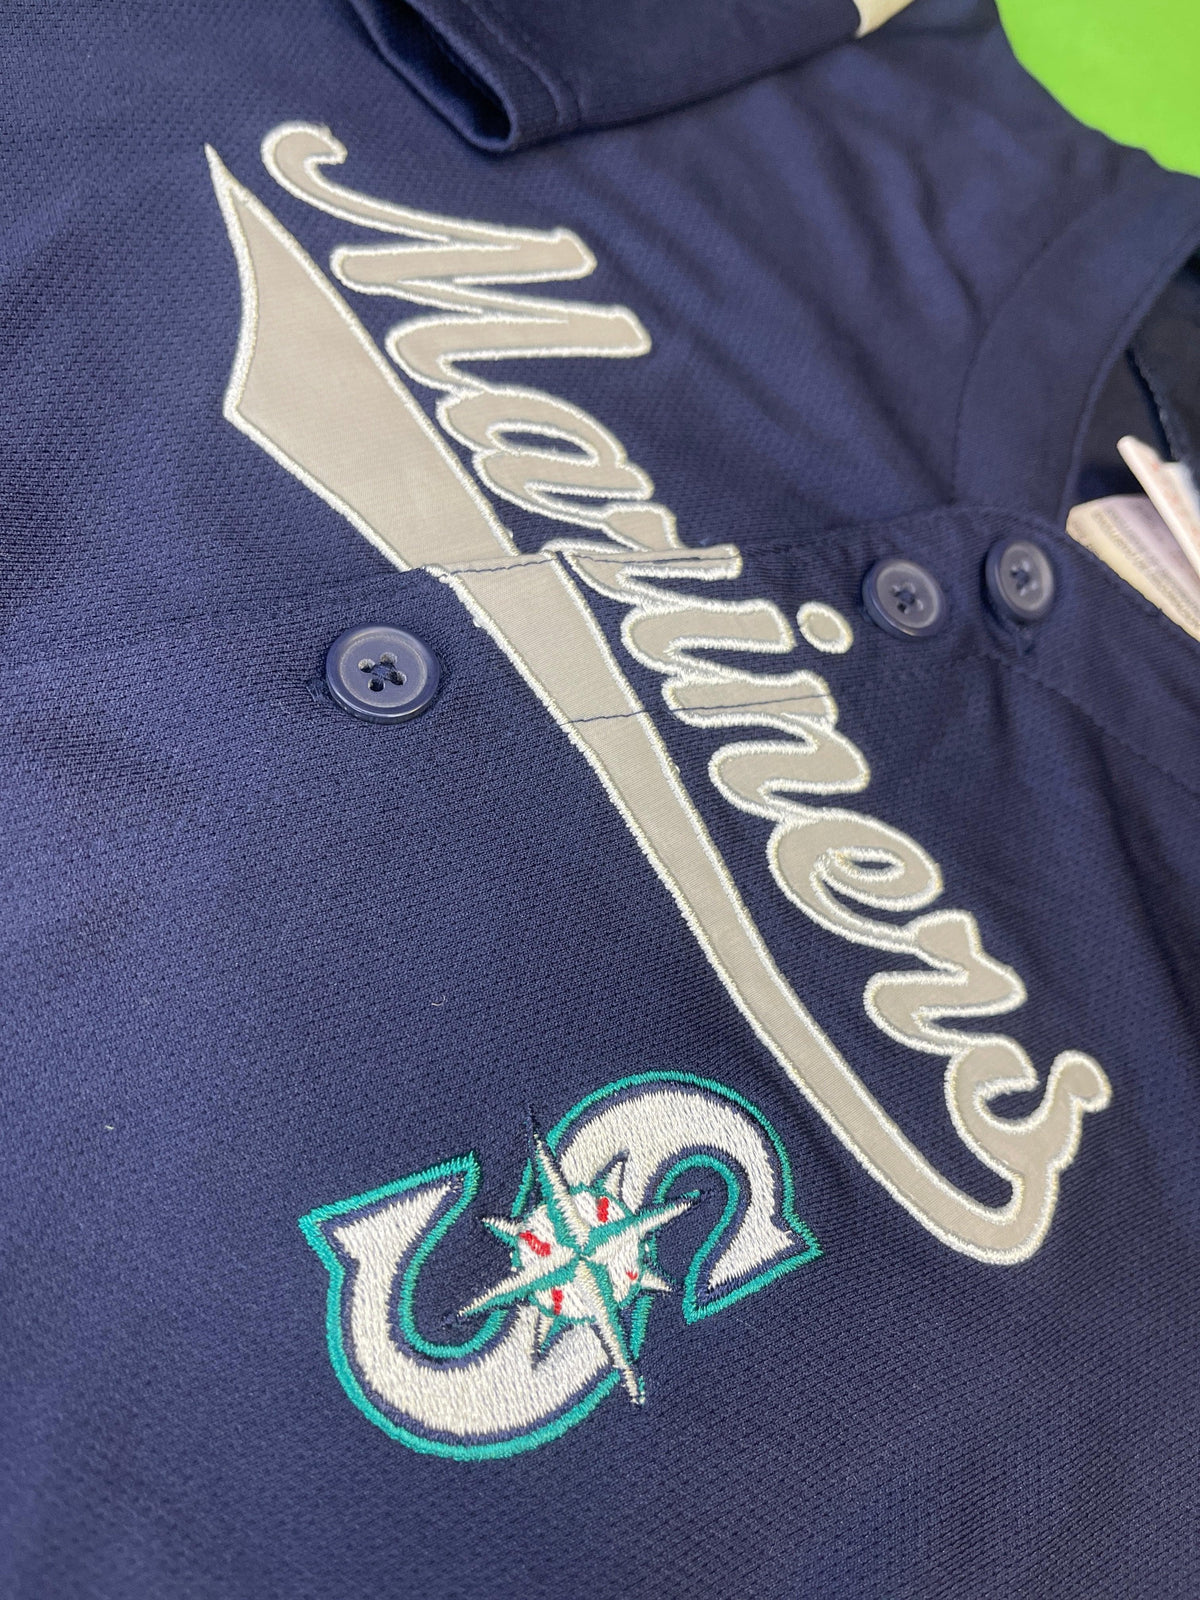 MLB Seattle Mariners Team Athletics Stitched Baseball Jersey Toddler 4T